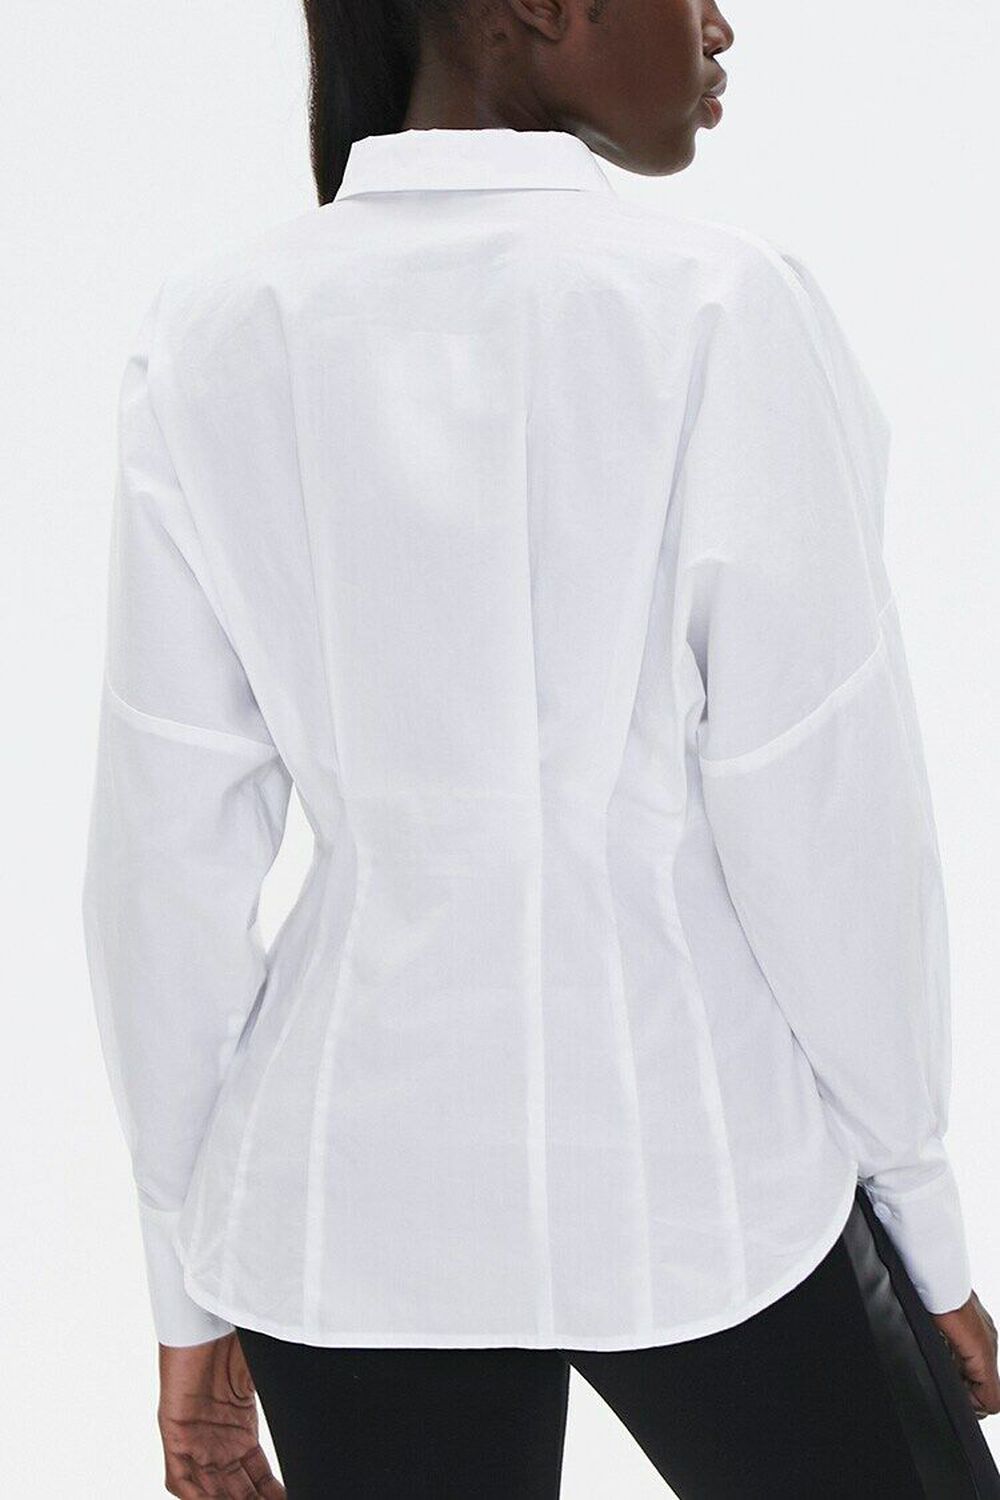 WHITE Pintucked Batwing-Sleeve Shirt, image 3